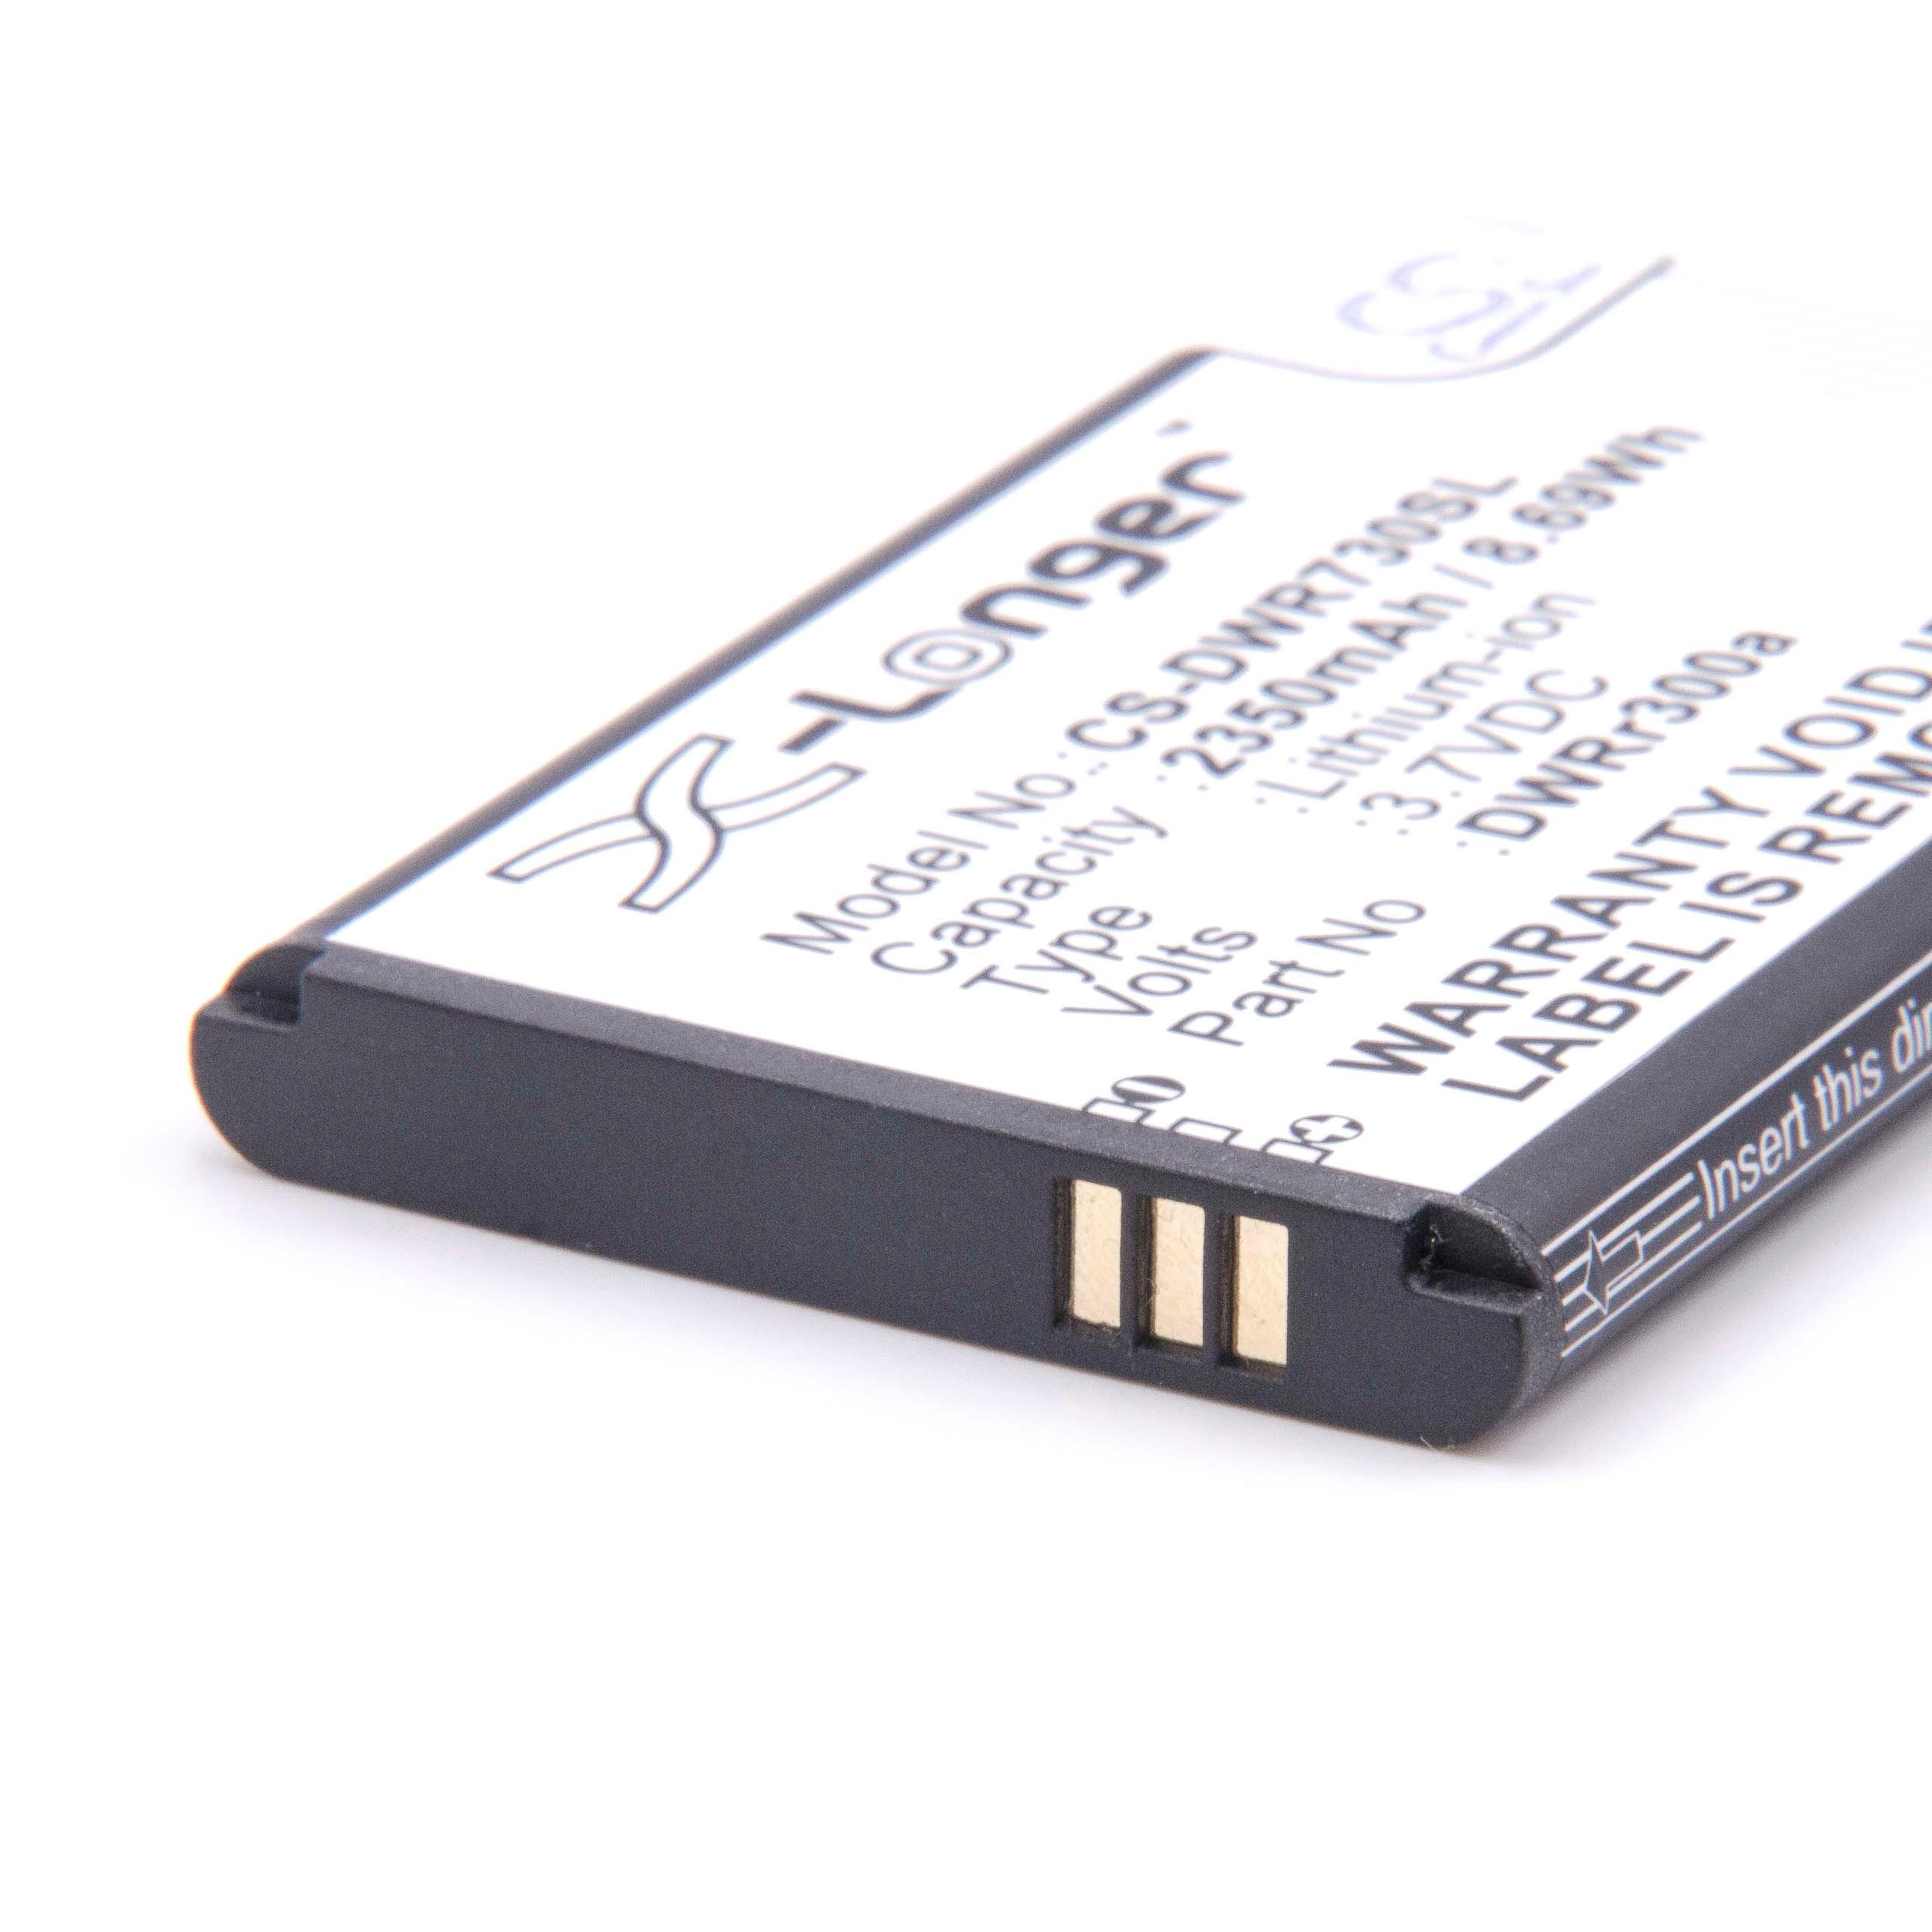 Akumulator do mobilnego routera / modemu WiFi zamiennik D-Link 6BT-R300A-291 - 2350 mAh 3,7 V Li-Ion